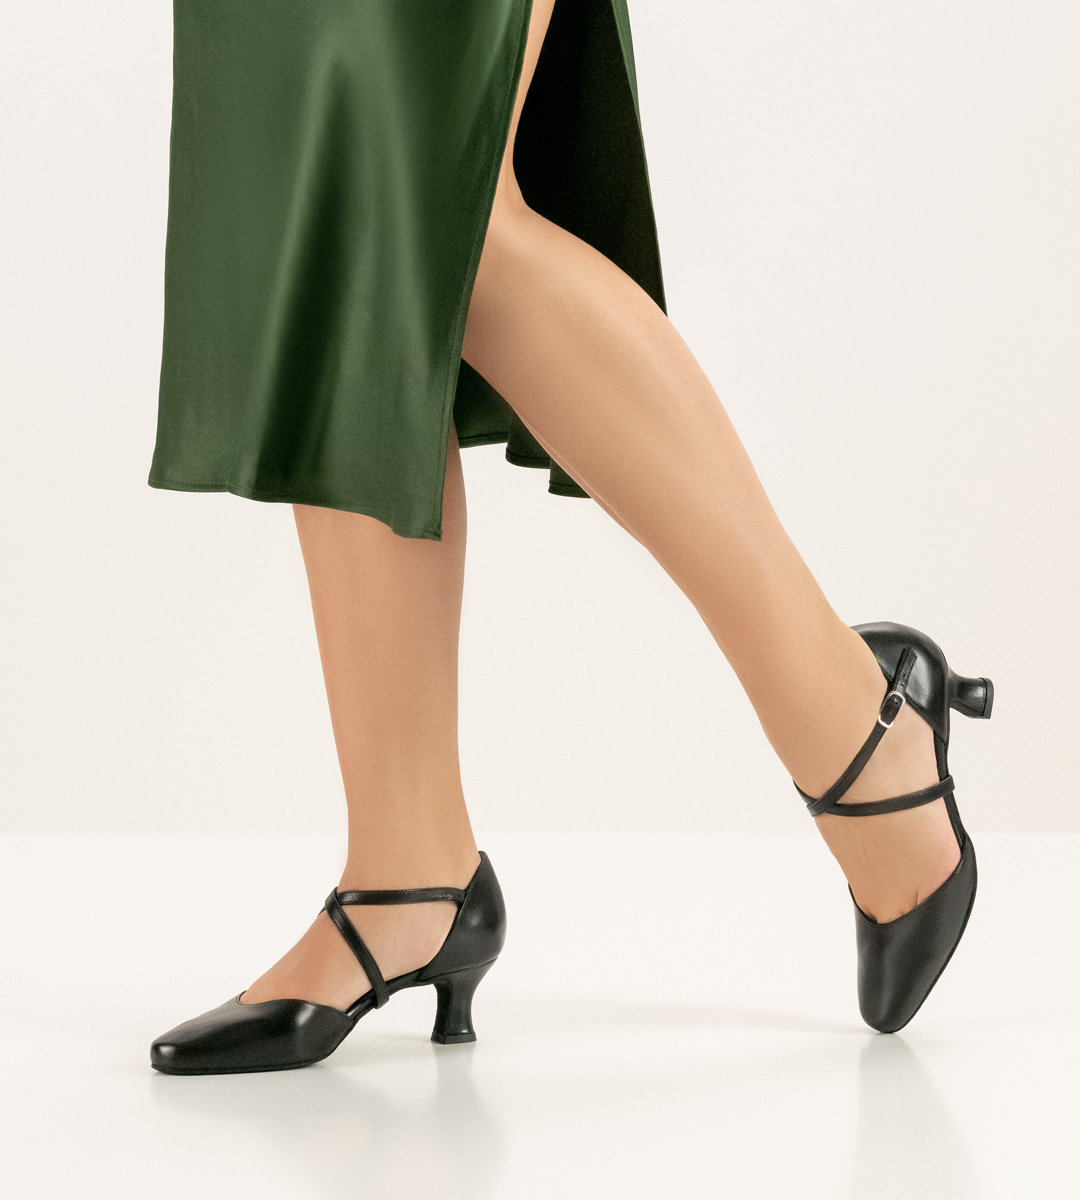 5.5 cm high Werner Kern ladies' dance shoe in combination with black dress